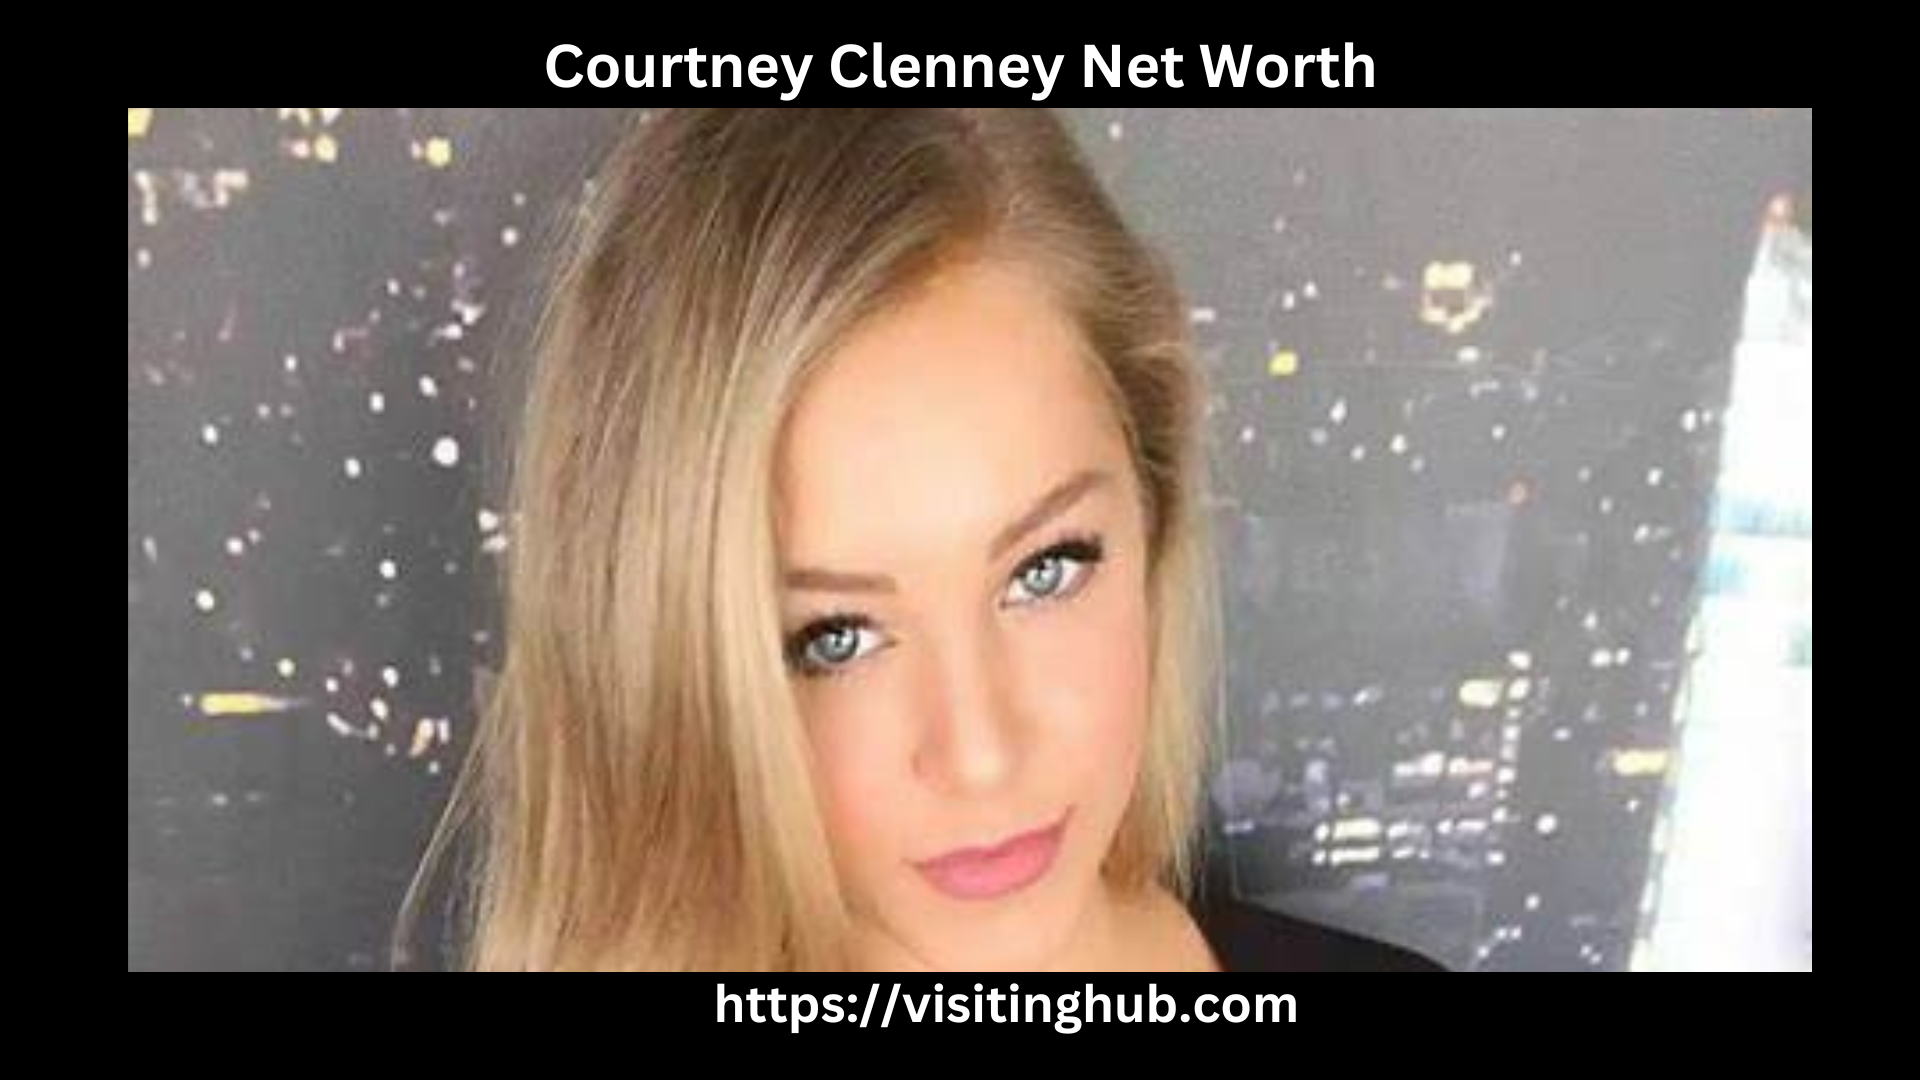 Courtney Clenney Net Worth